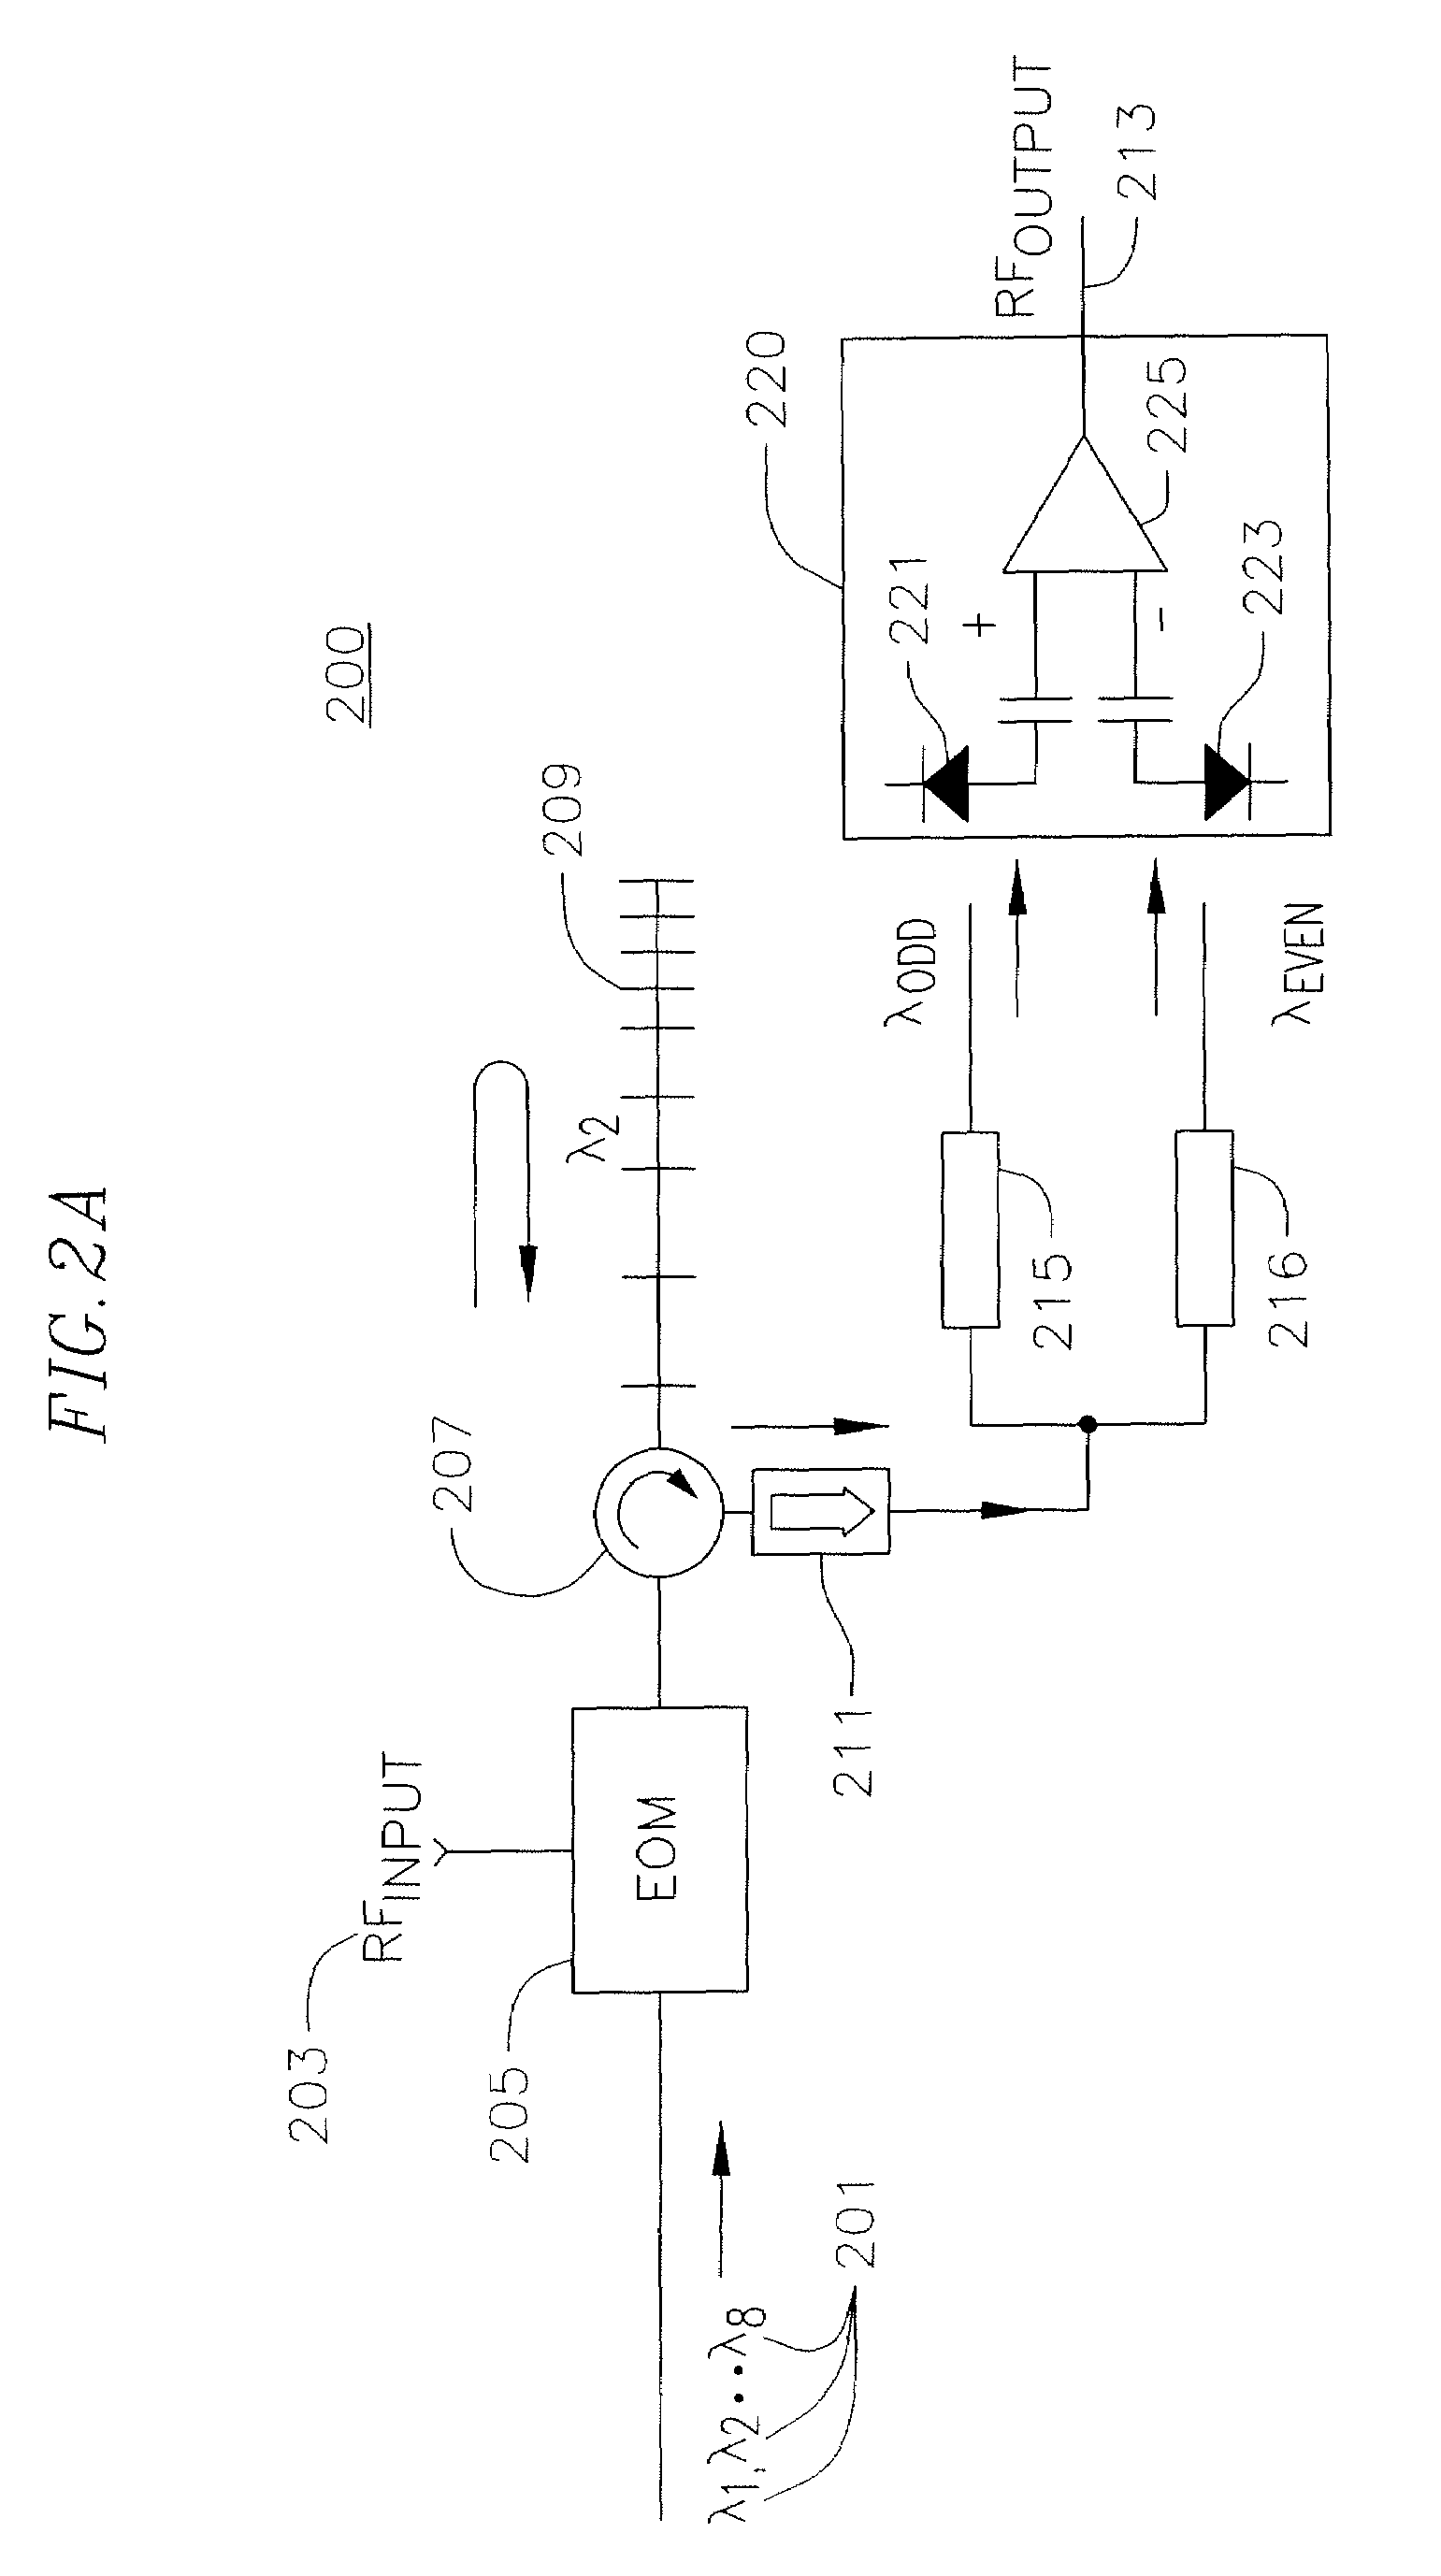 RF-photonic transversal filter method and apparatus